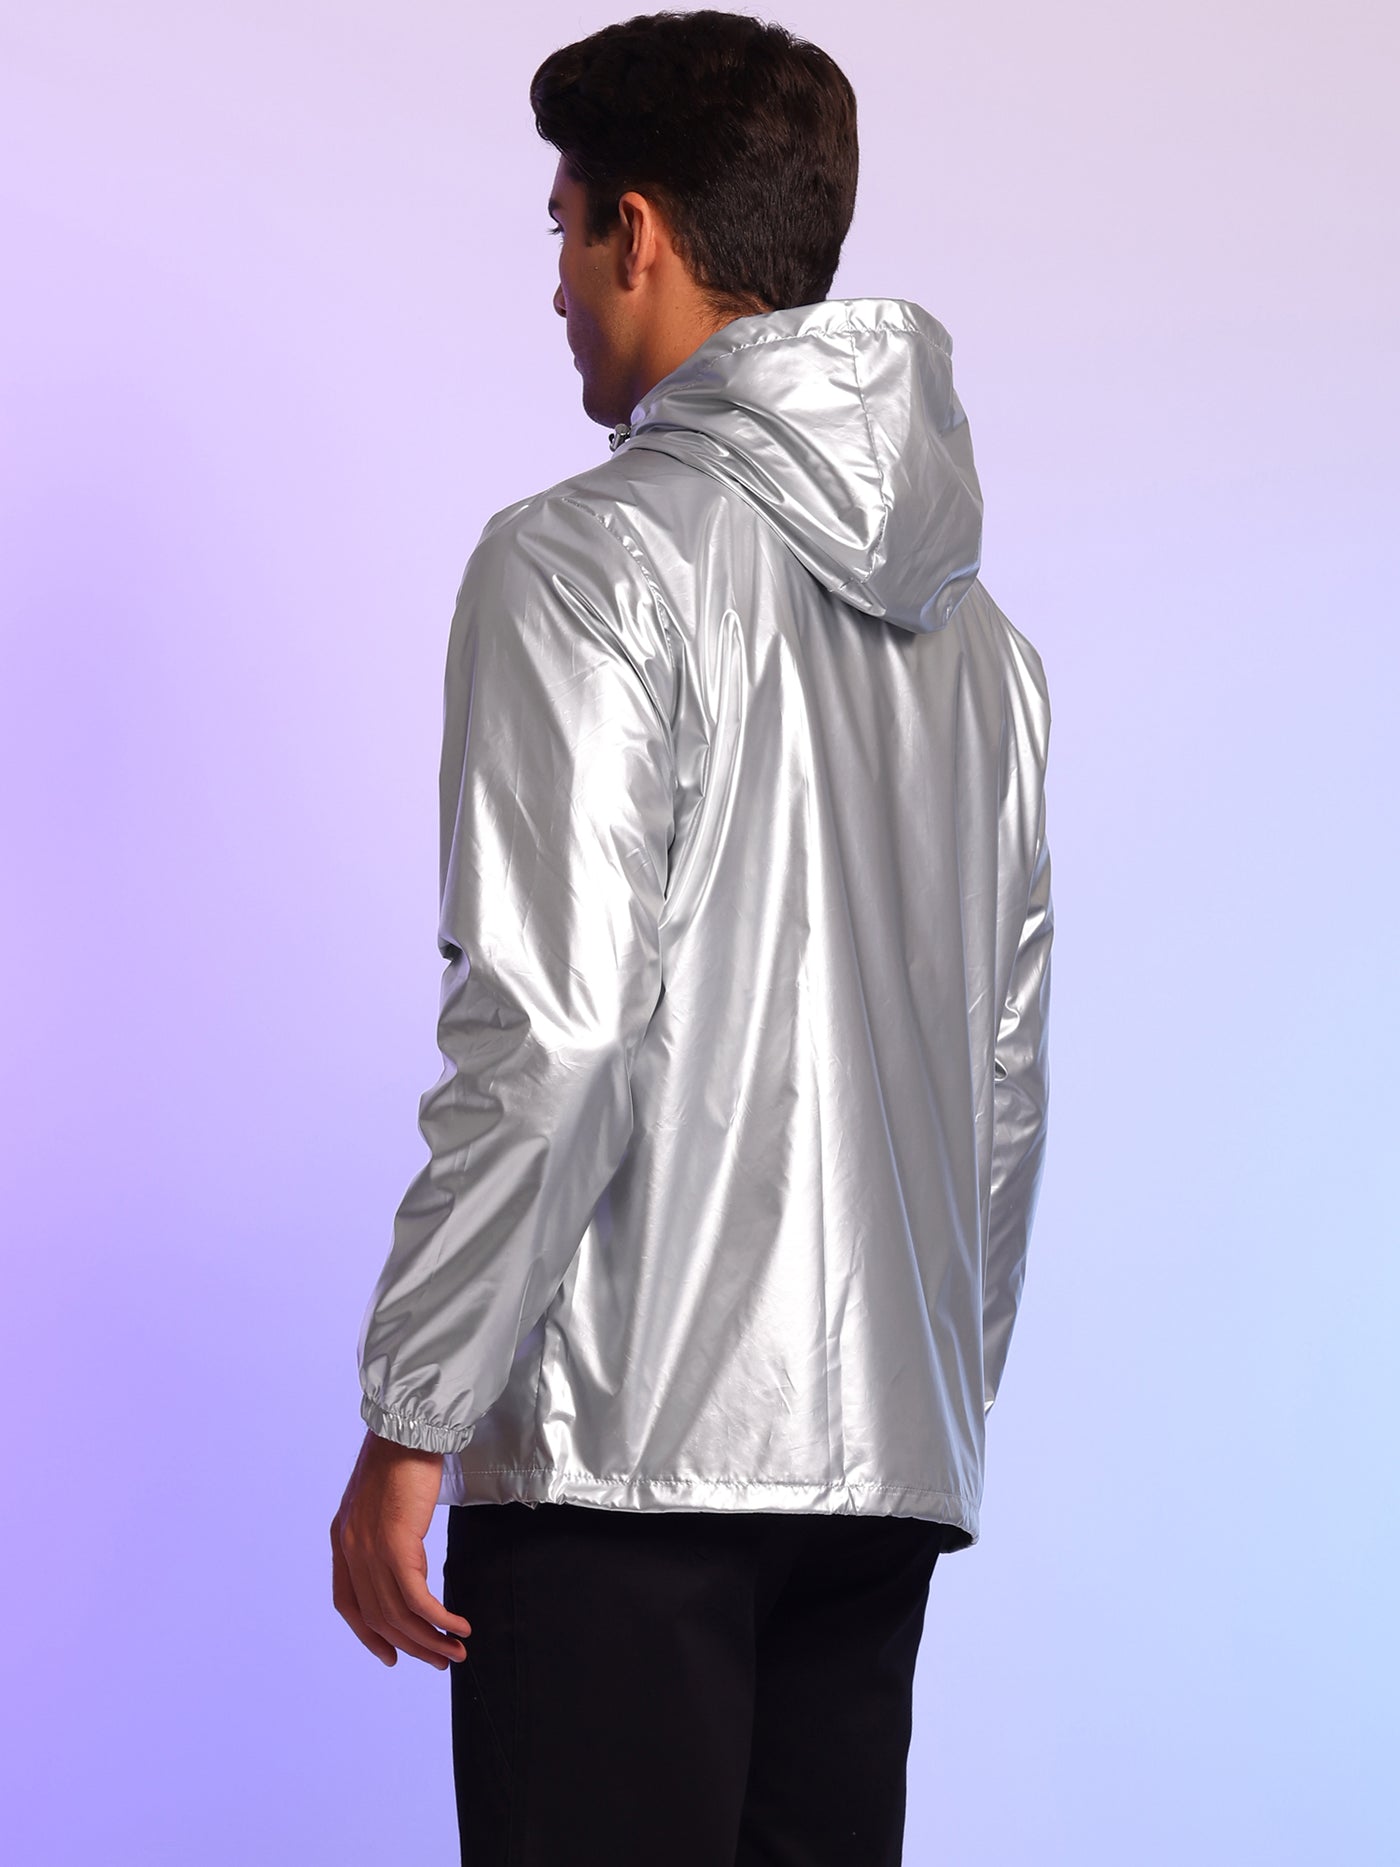 Bublédon Holographic Jacket for Men's Lightweight Long Sleeves Metallic Shiny Hoodie Coat